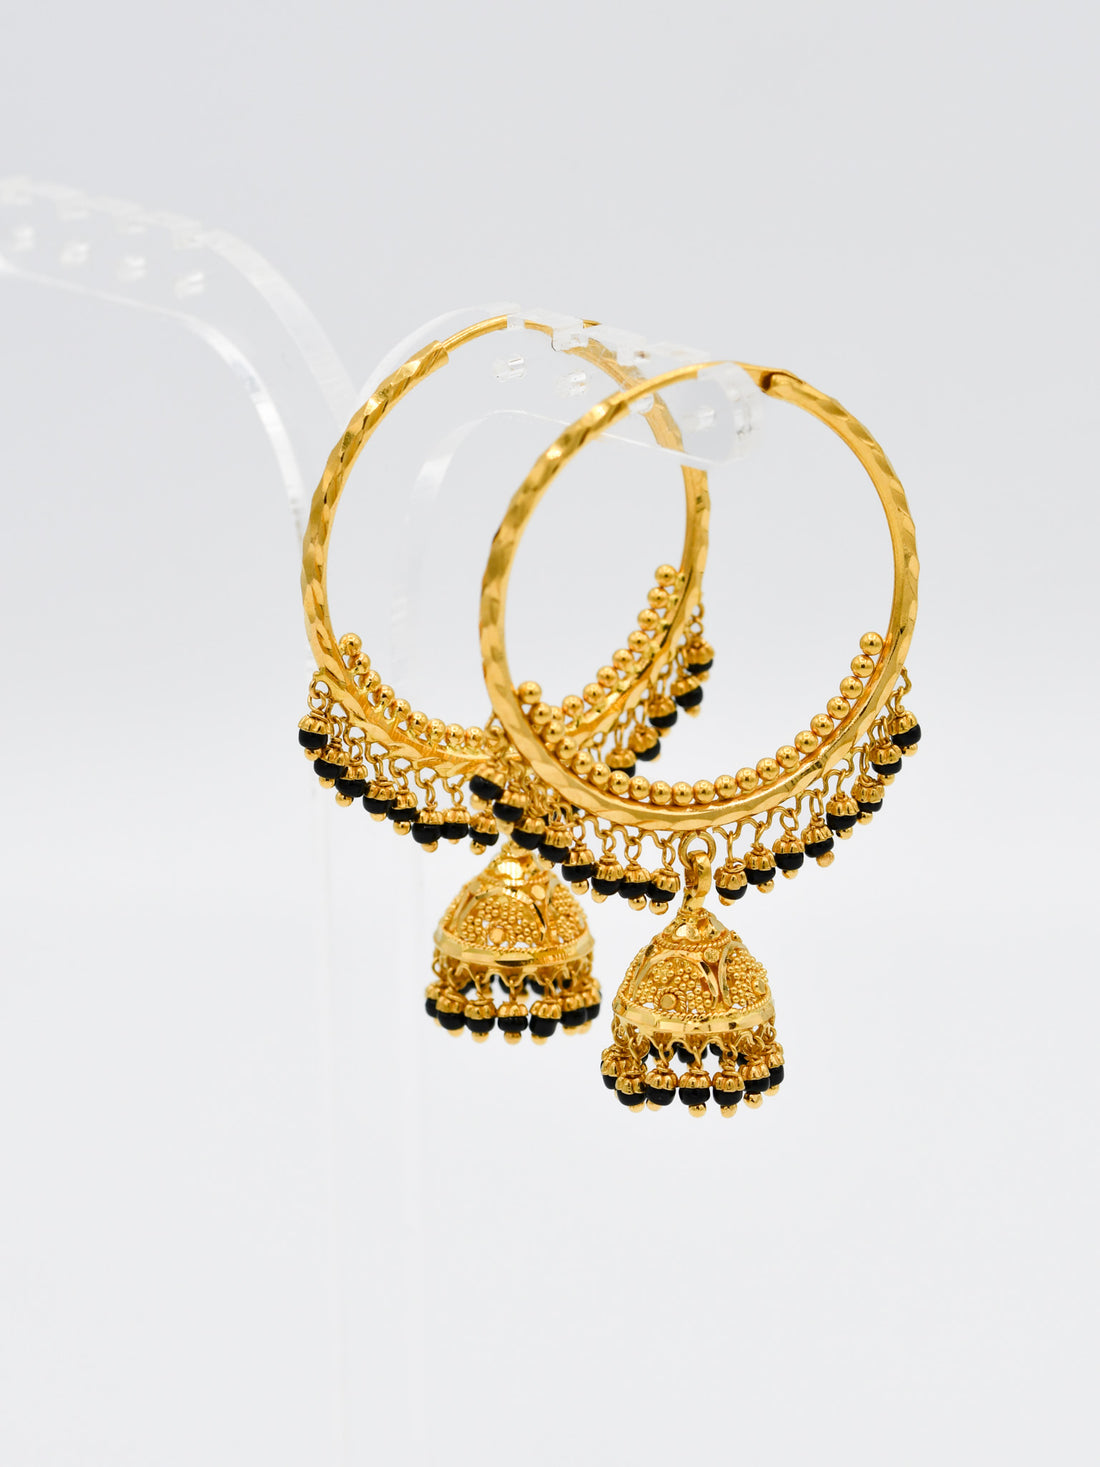 22ct Gold Black Beads Jhumki Bali - Roop Darshan